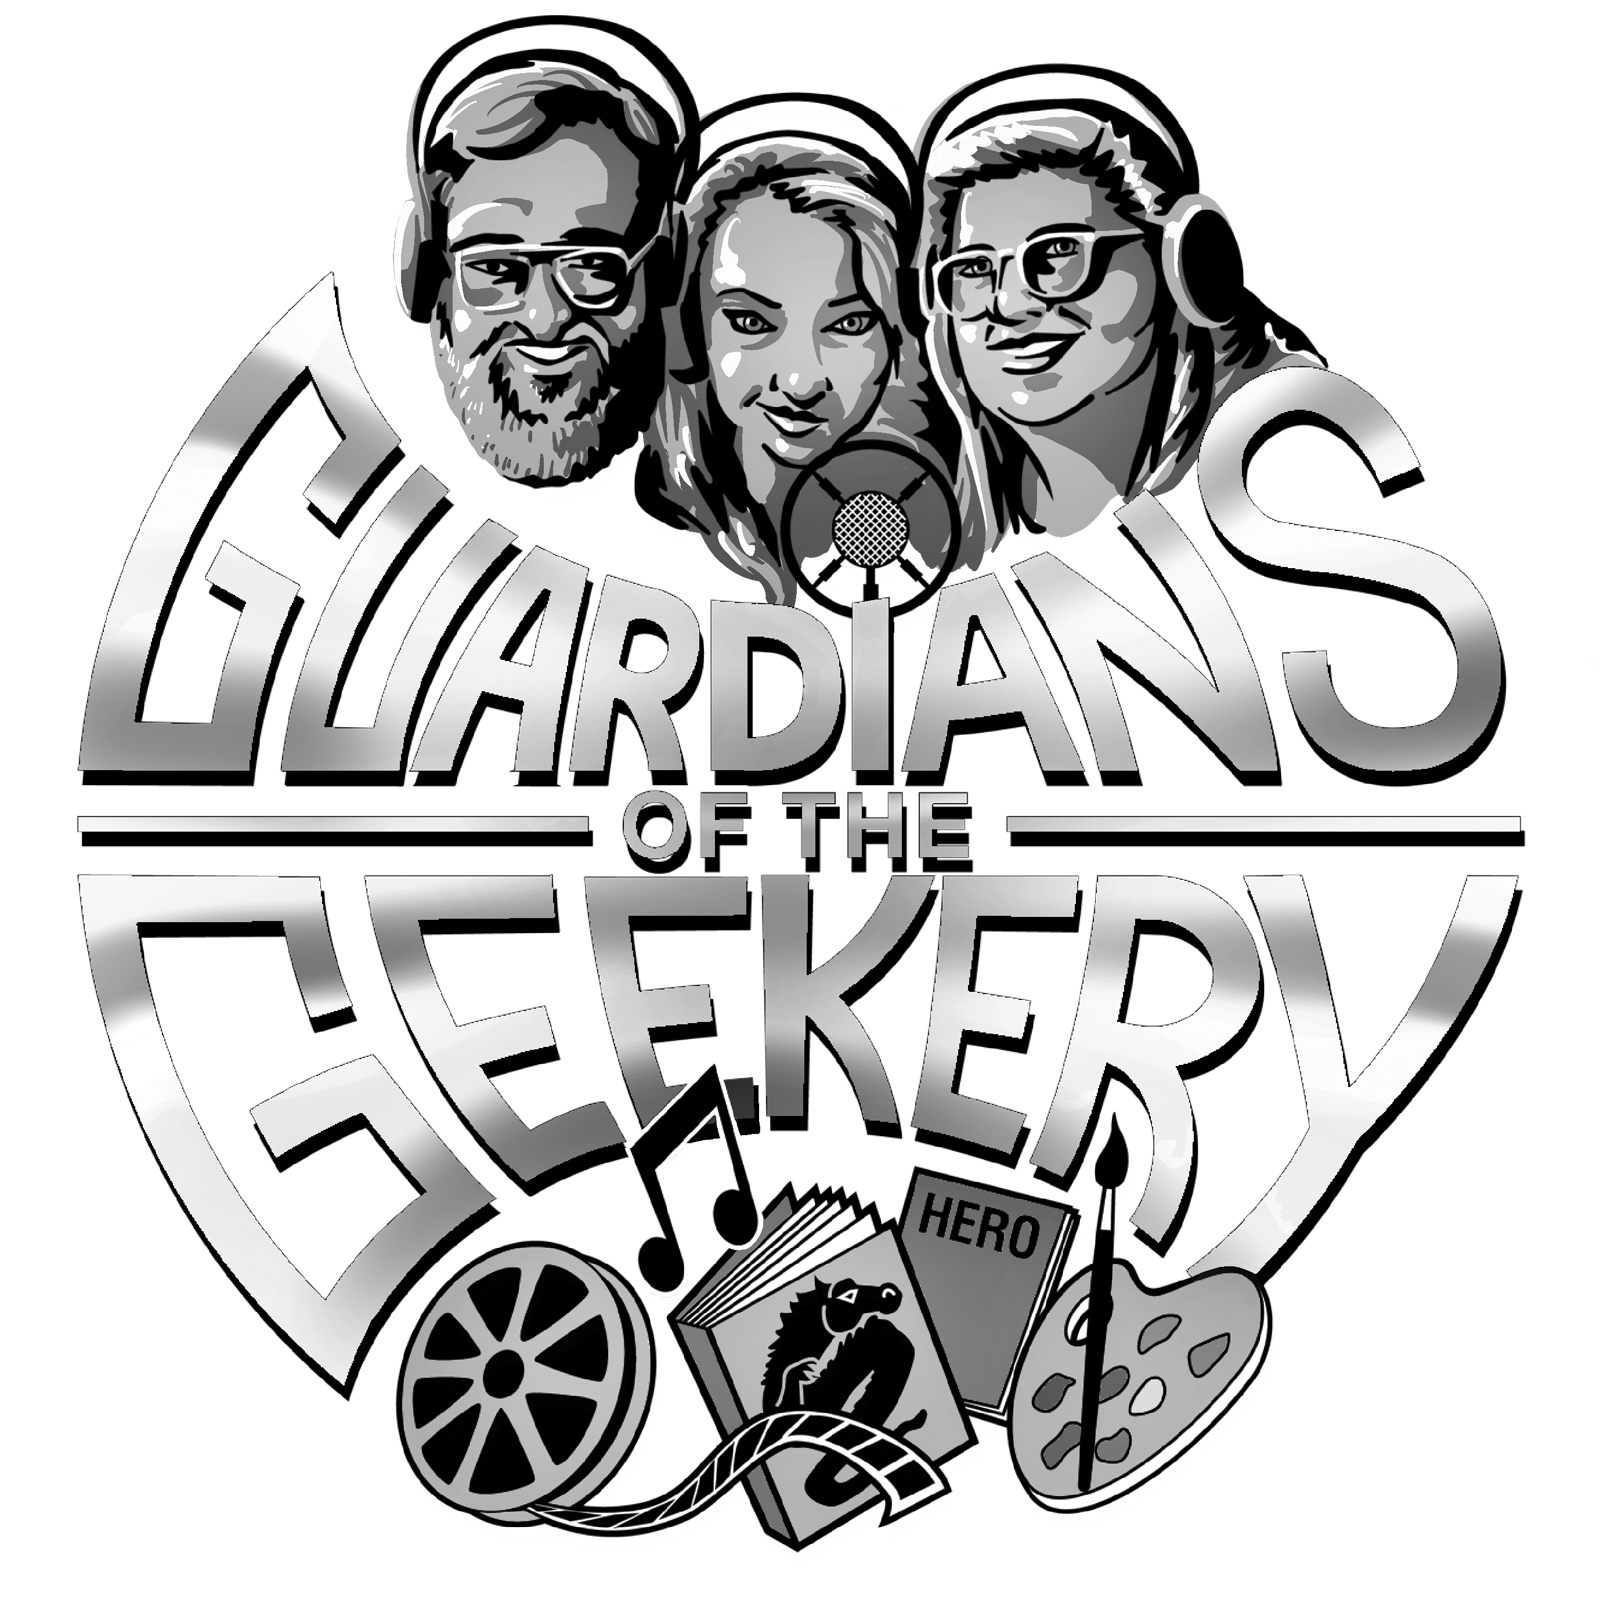 Guardians of the Geekery B&W logo